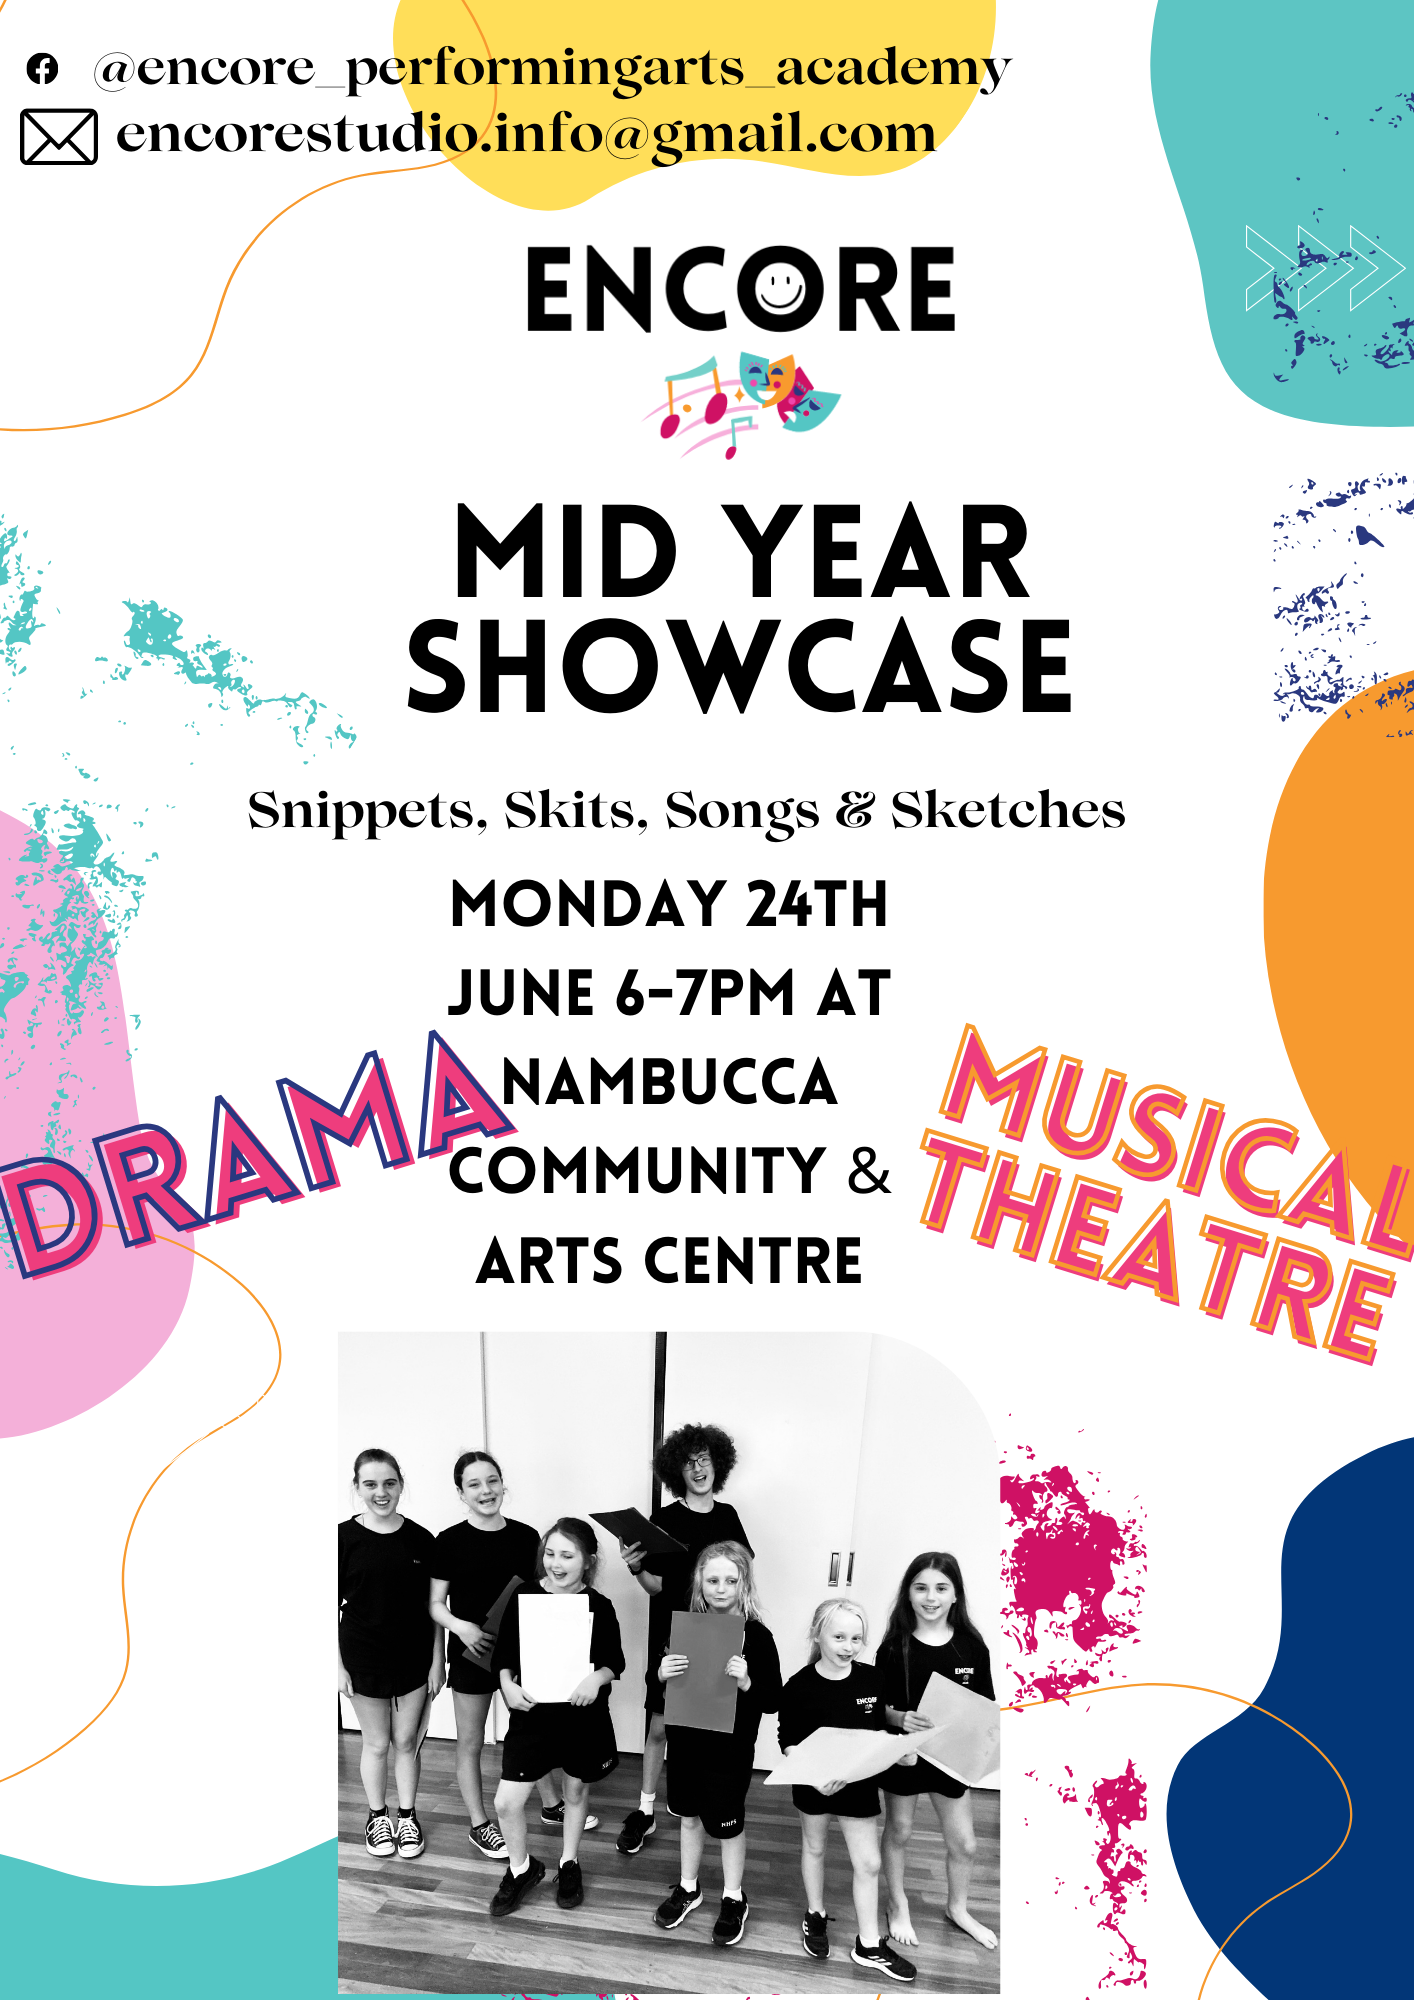 Encore Academy presents mid year showcase at Nambucca Community & Arts Centre